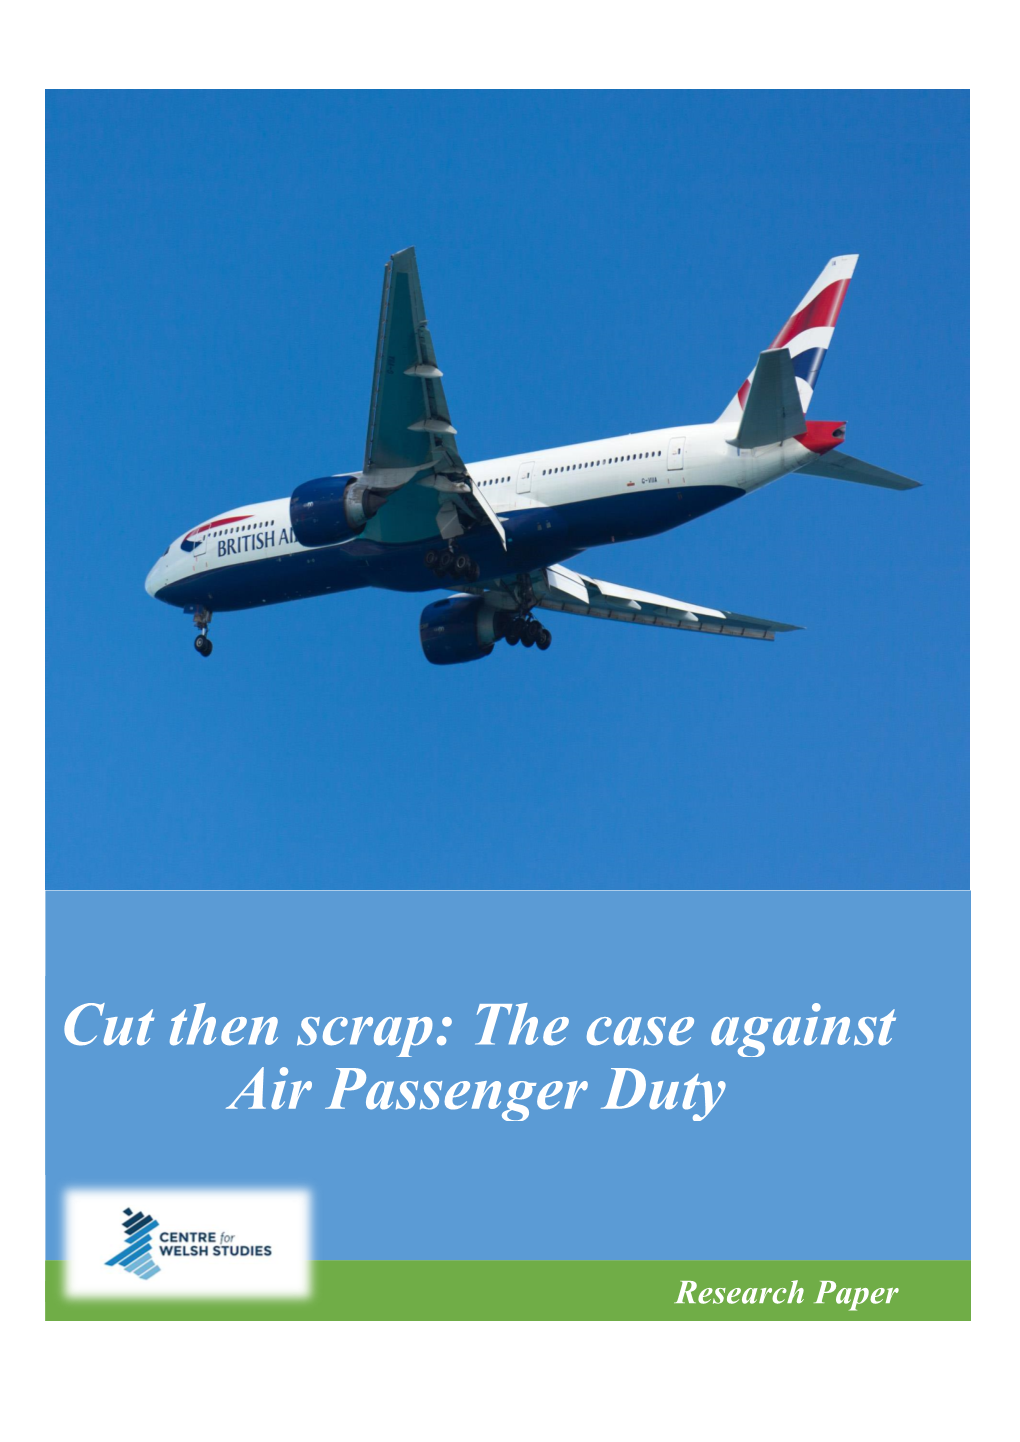 The Case Against Air Passenger Duty